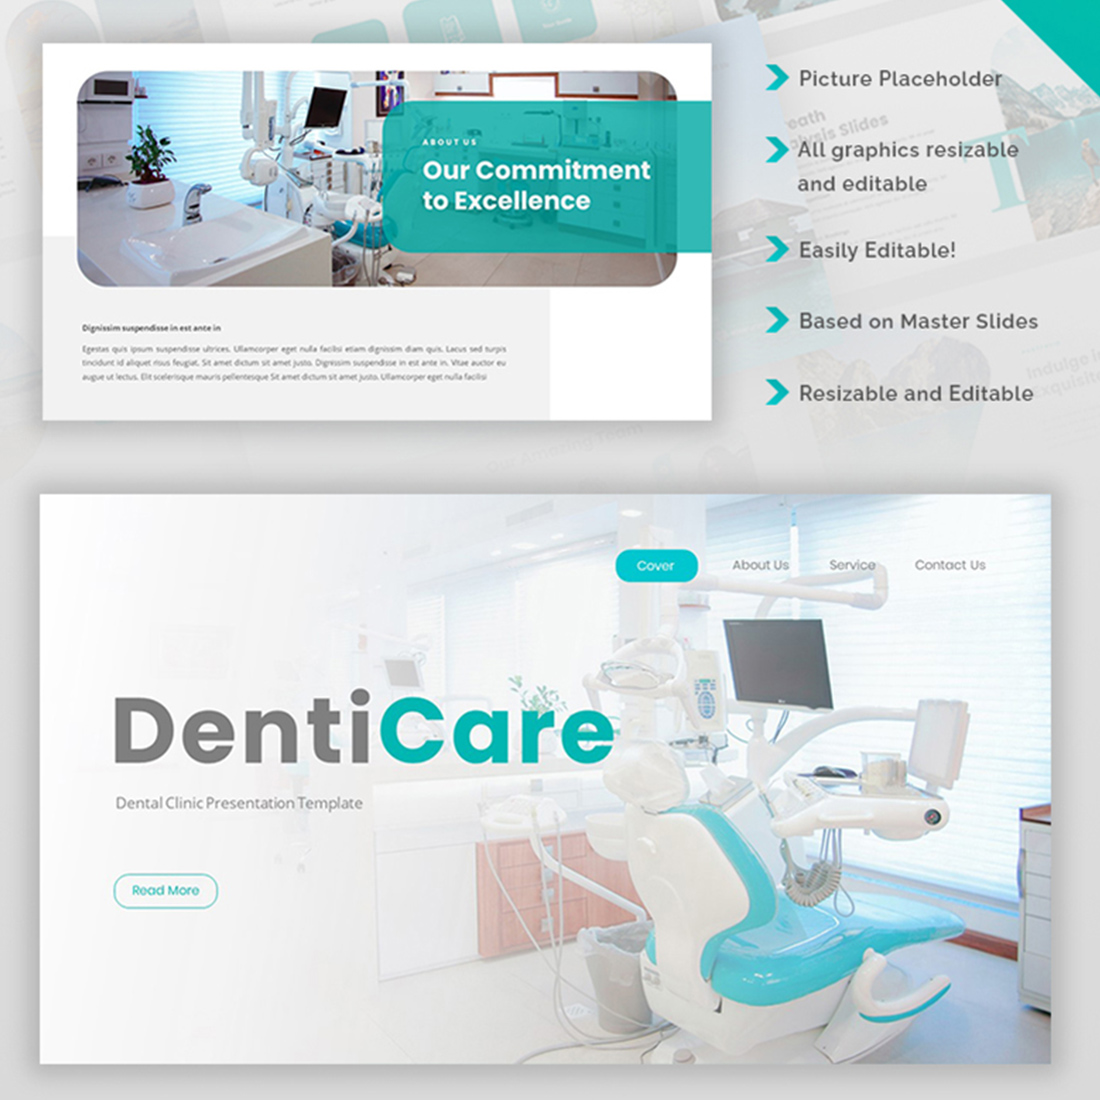 DentiCare-Dental Clinic Google Slides Template preview image.